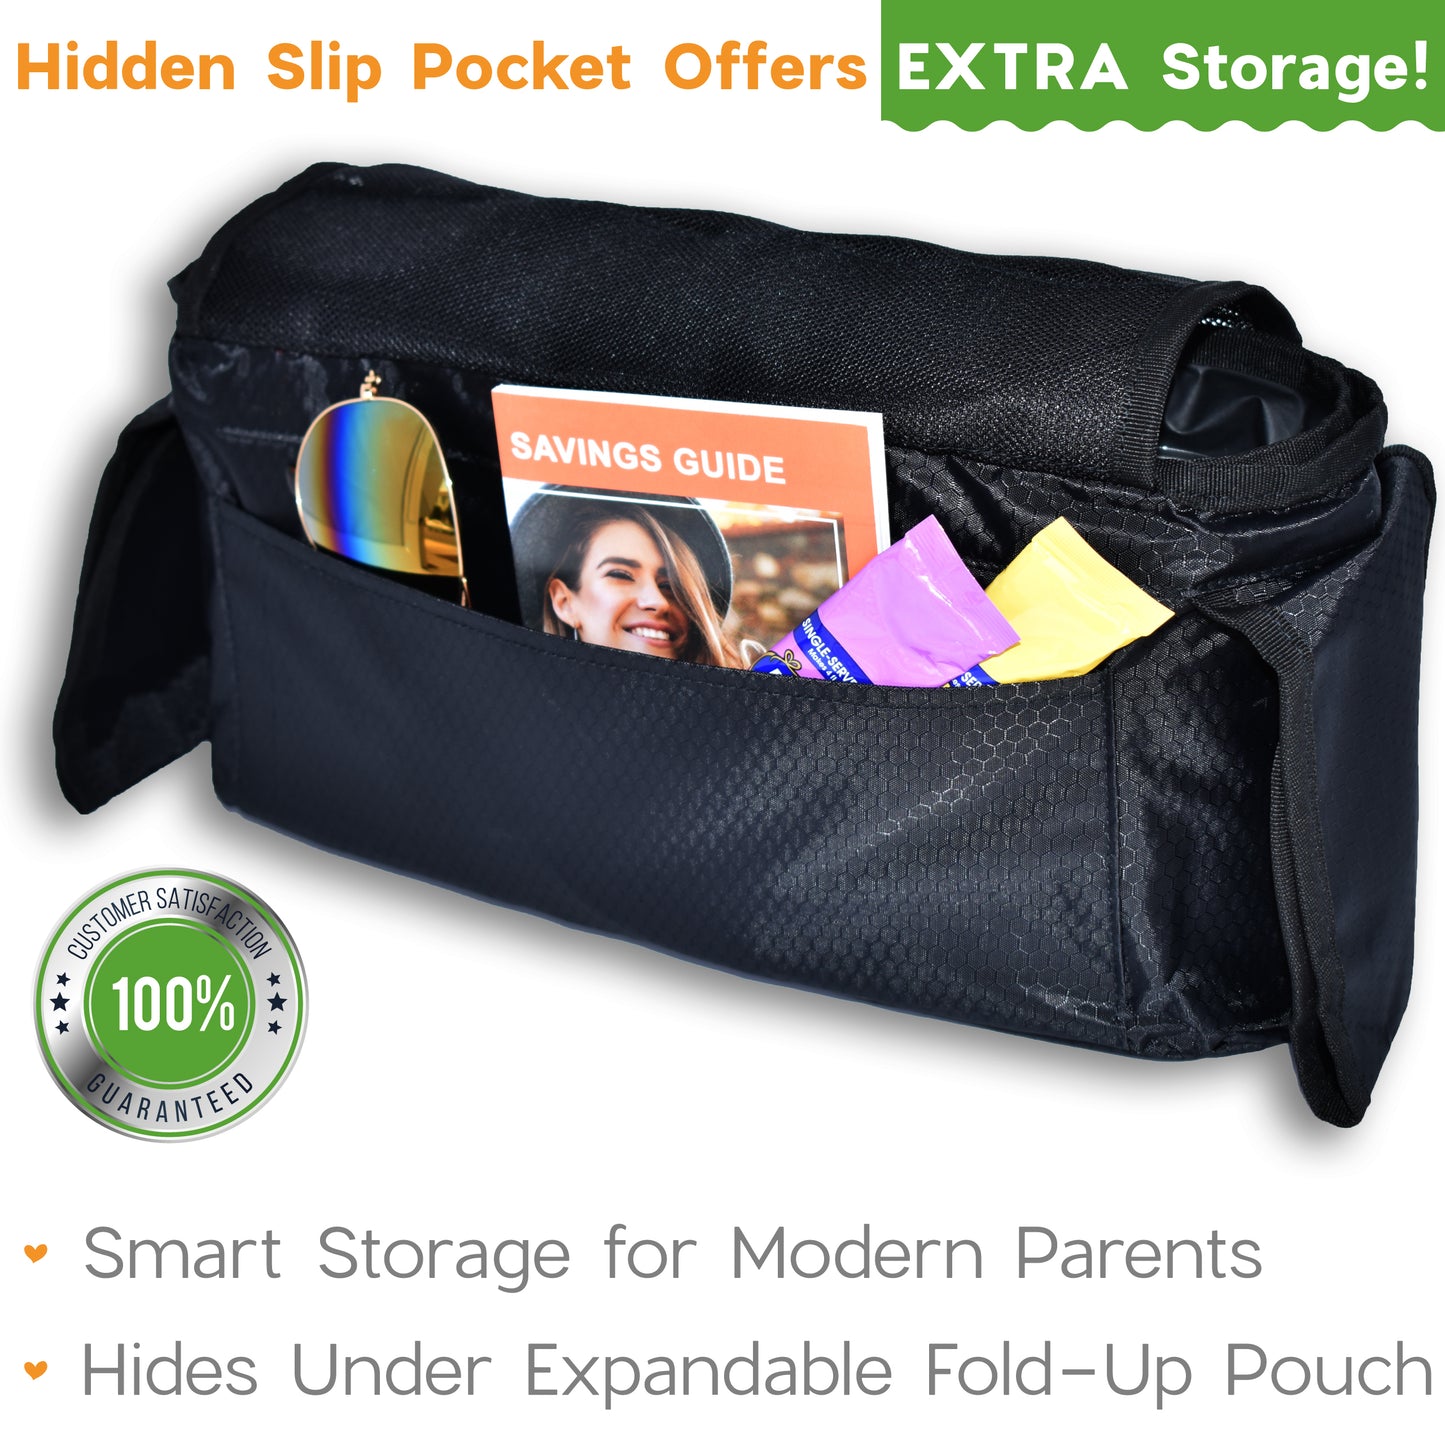 Universal Stroller Organizer Bag: Waterproof & Washable